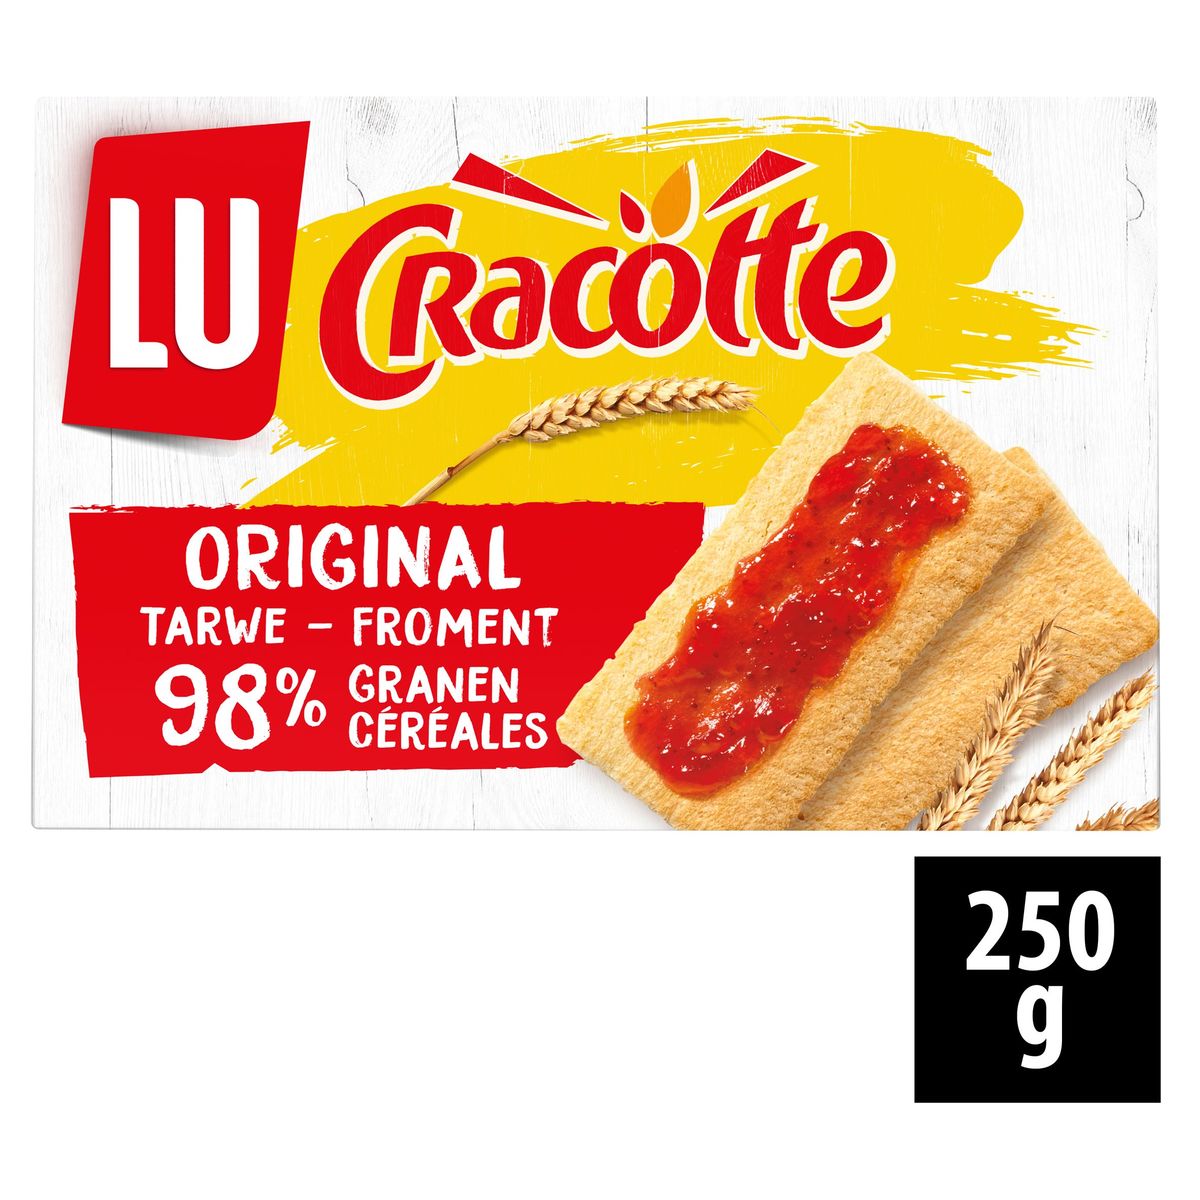 LU Cracotte Original Froment 250 g